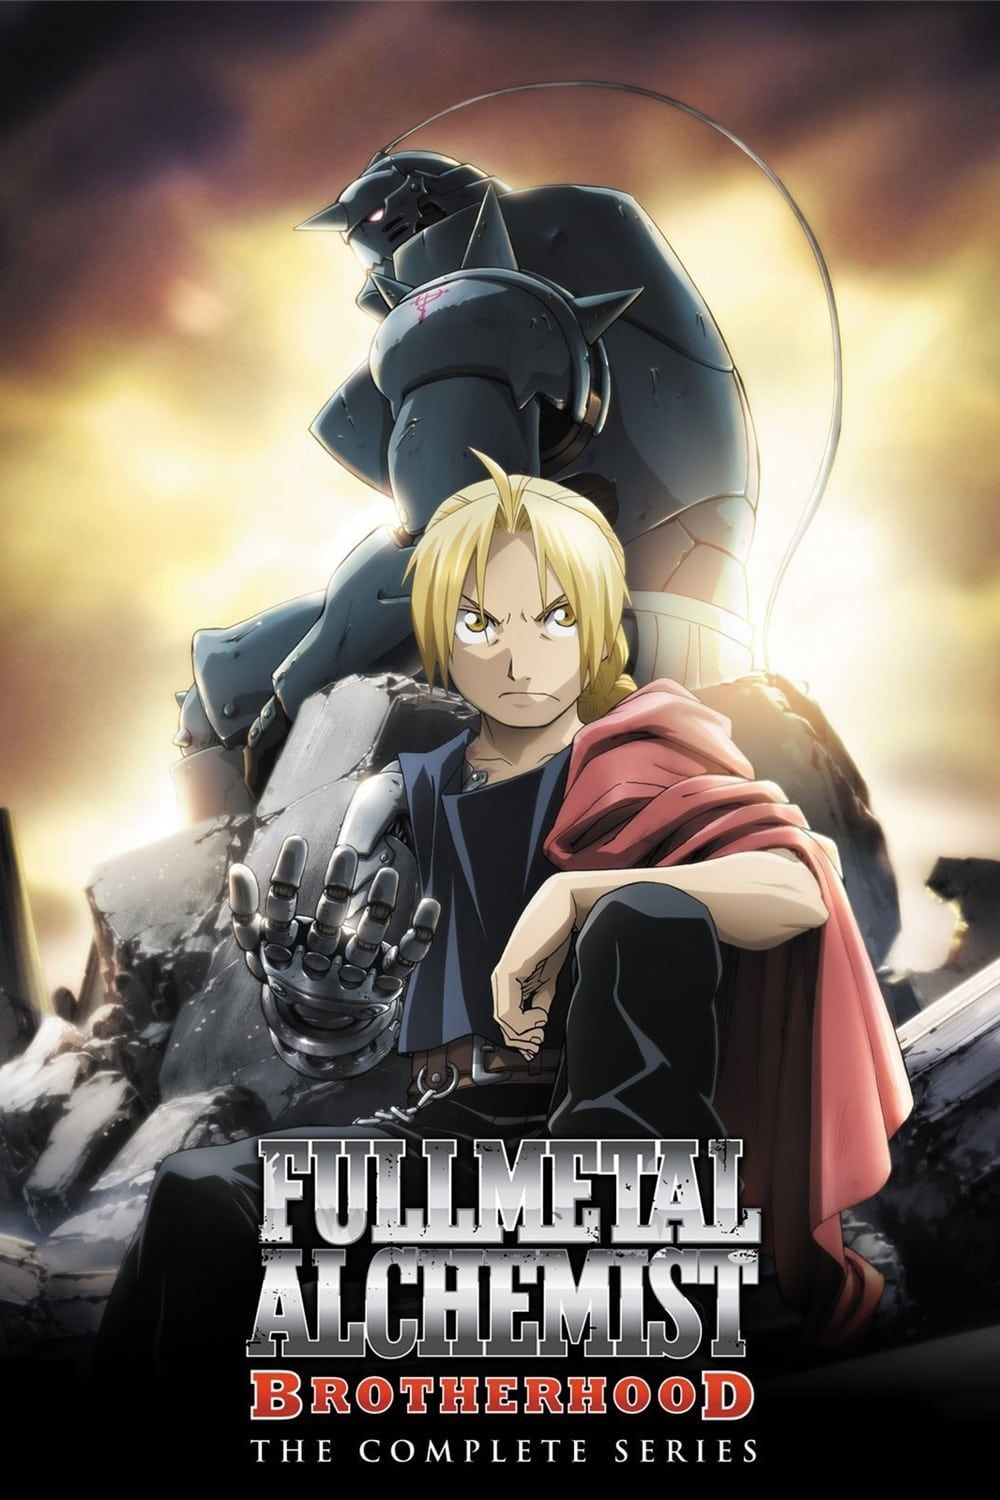 Watch Fullmetal Alchemist Season 1